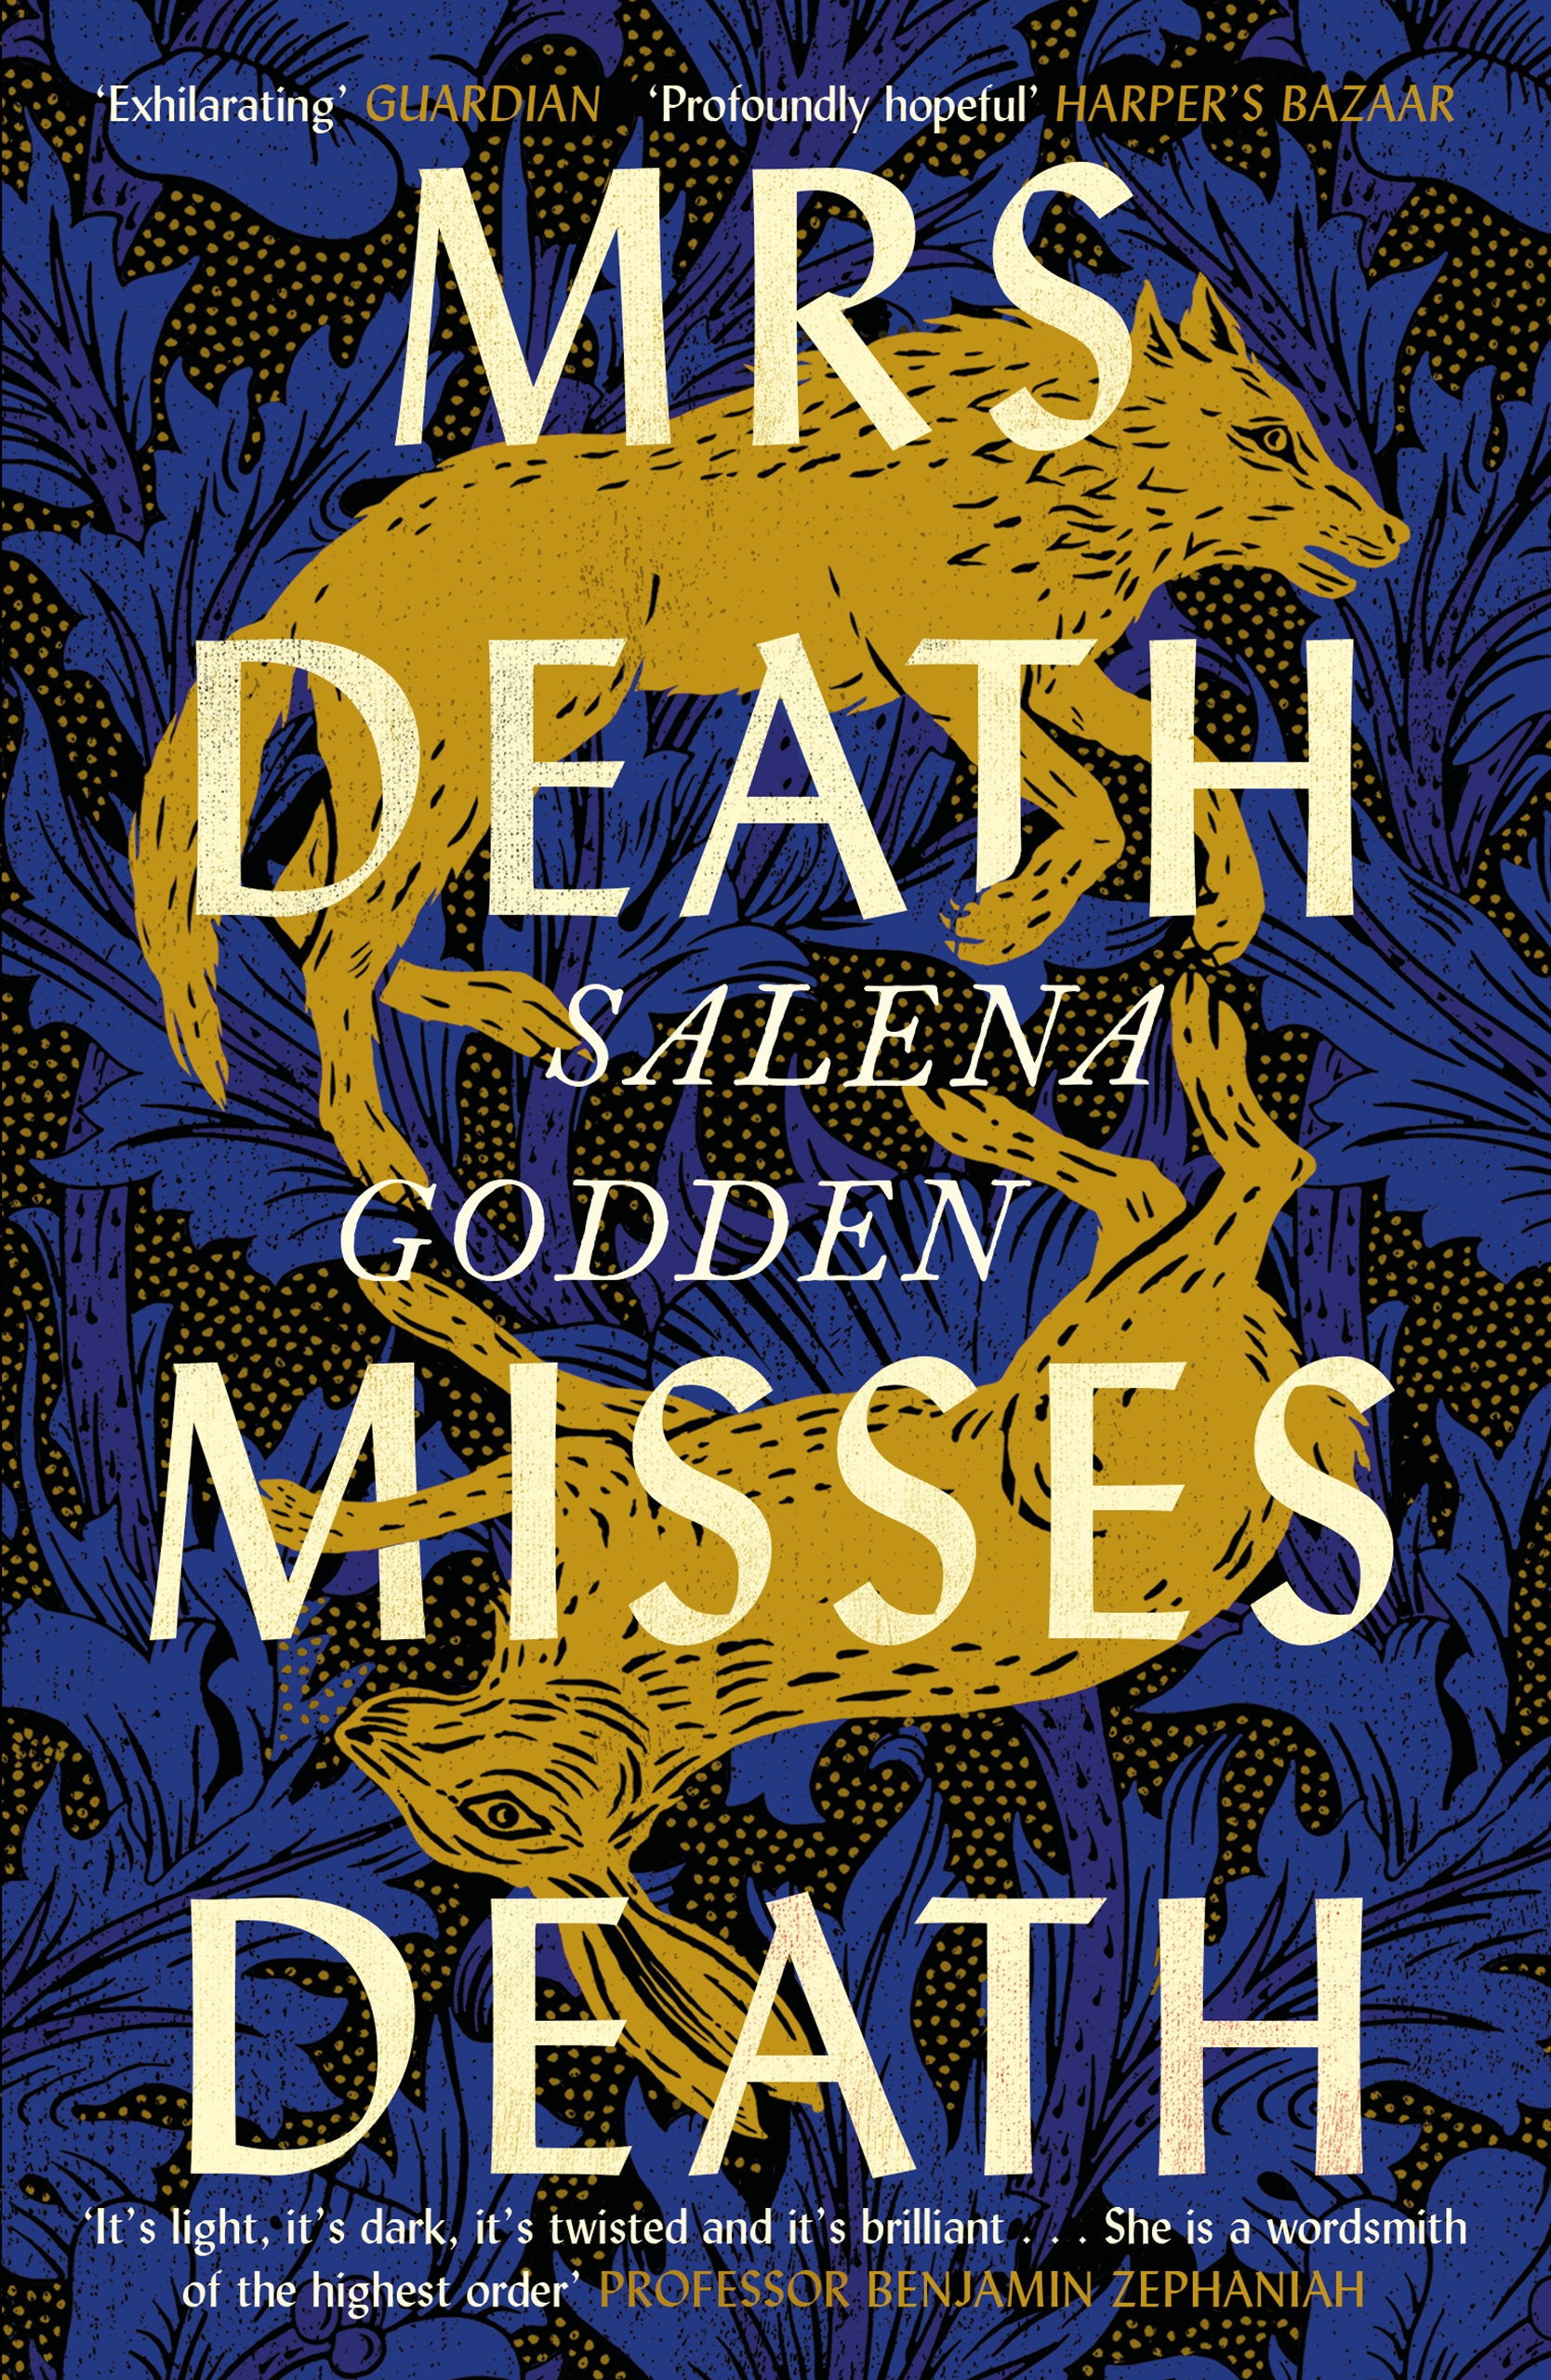 Mrs Death Misses Death by Salena Godden